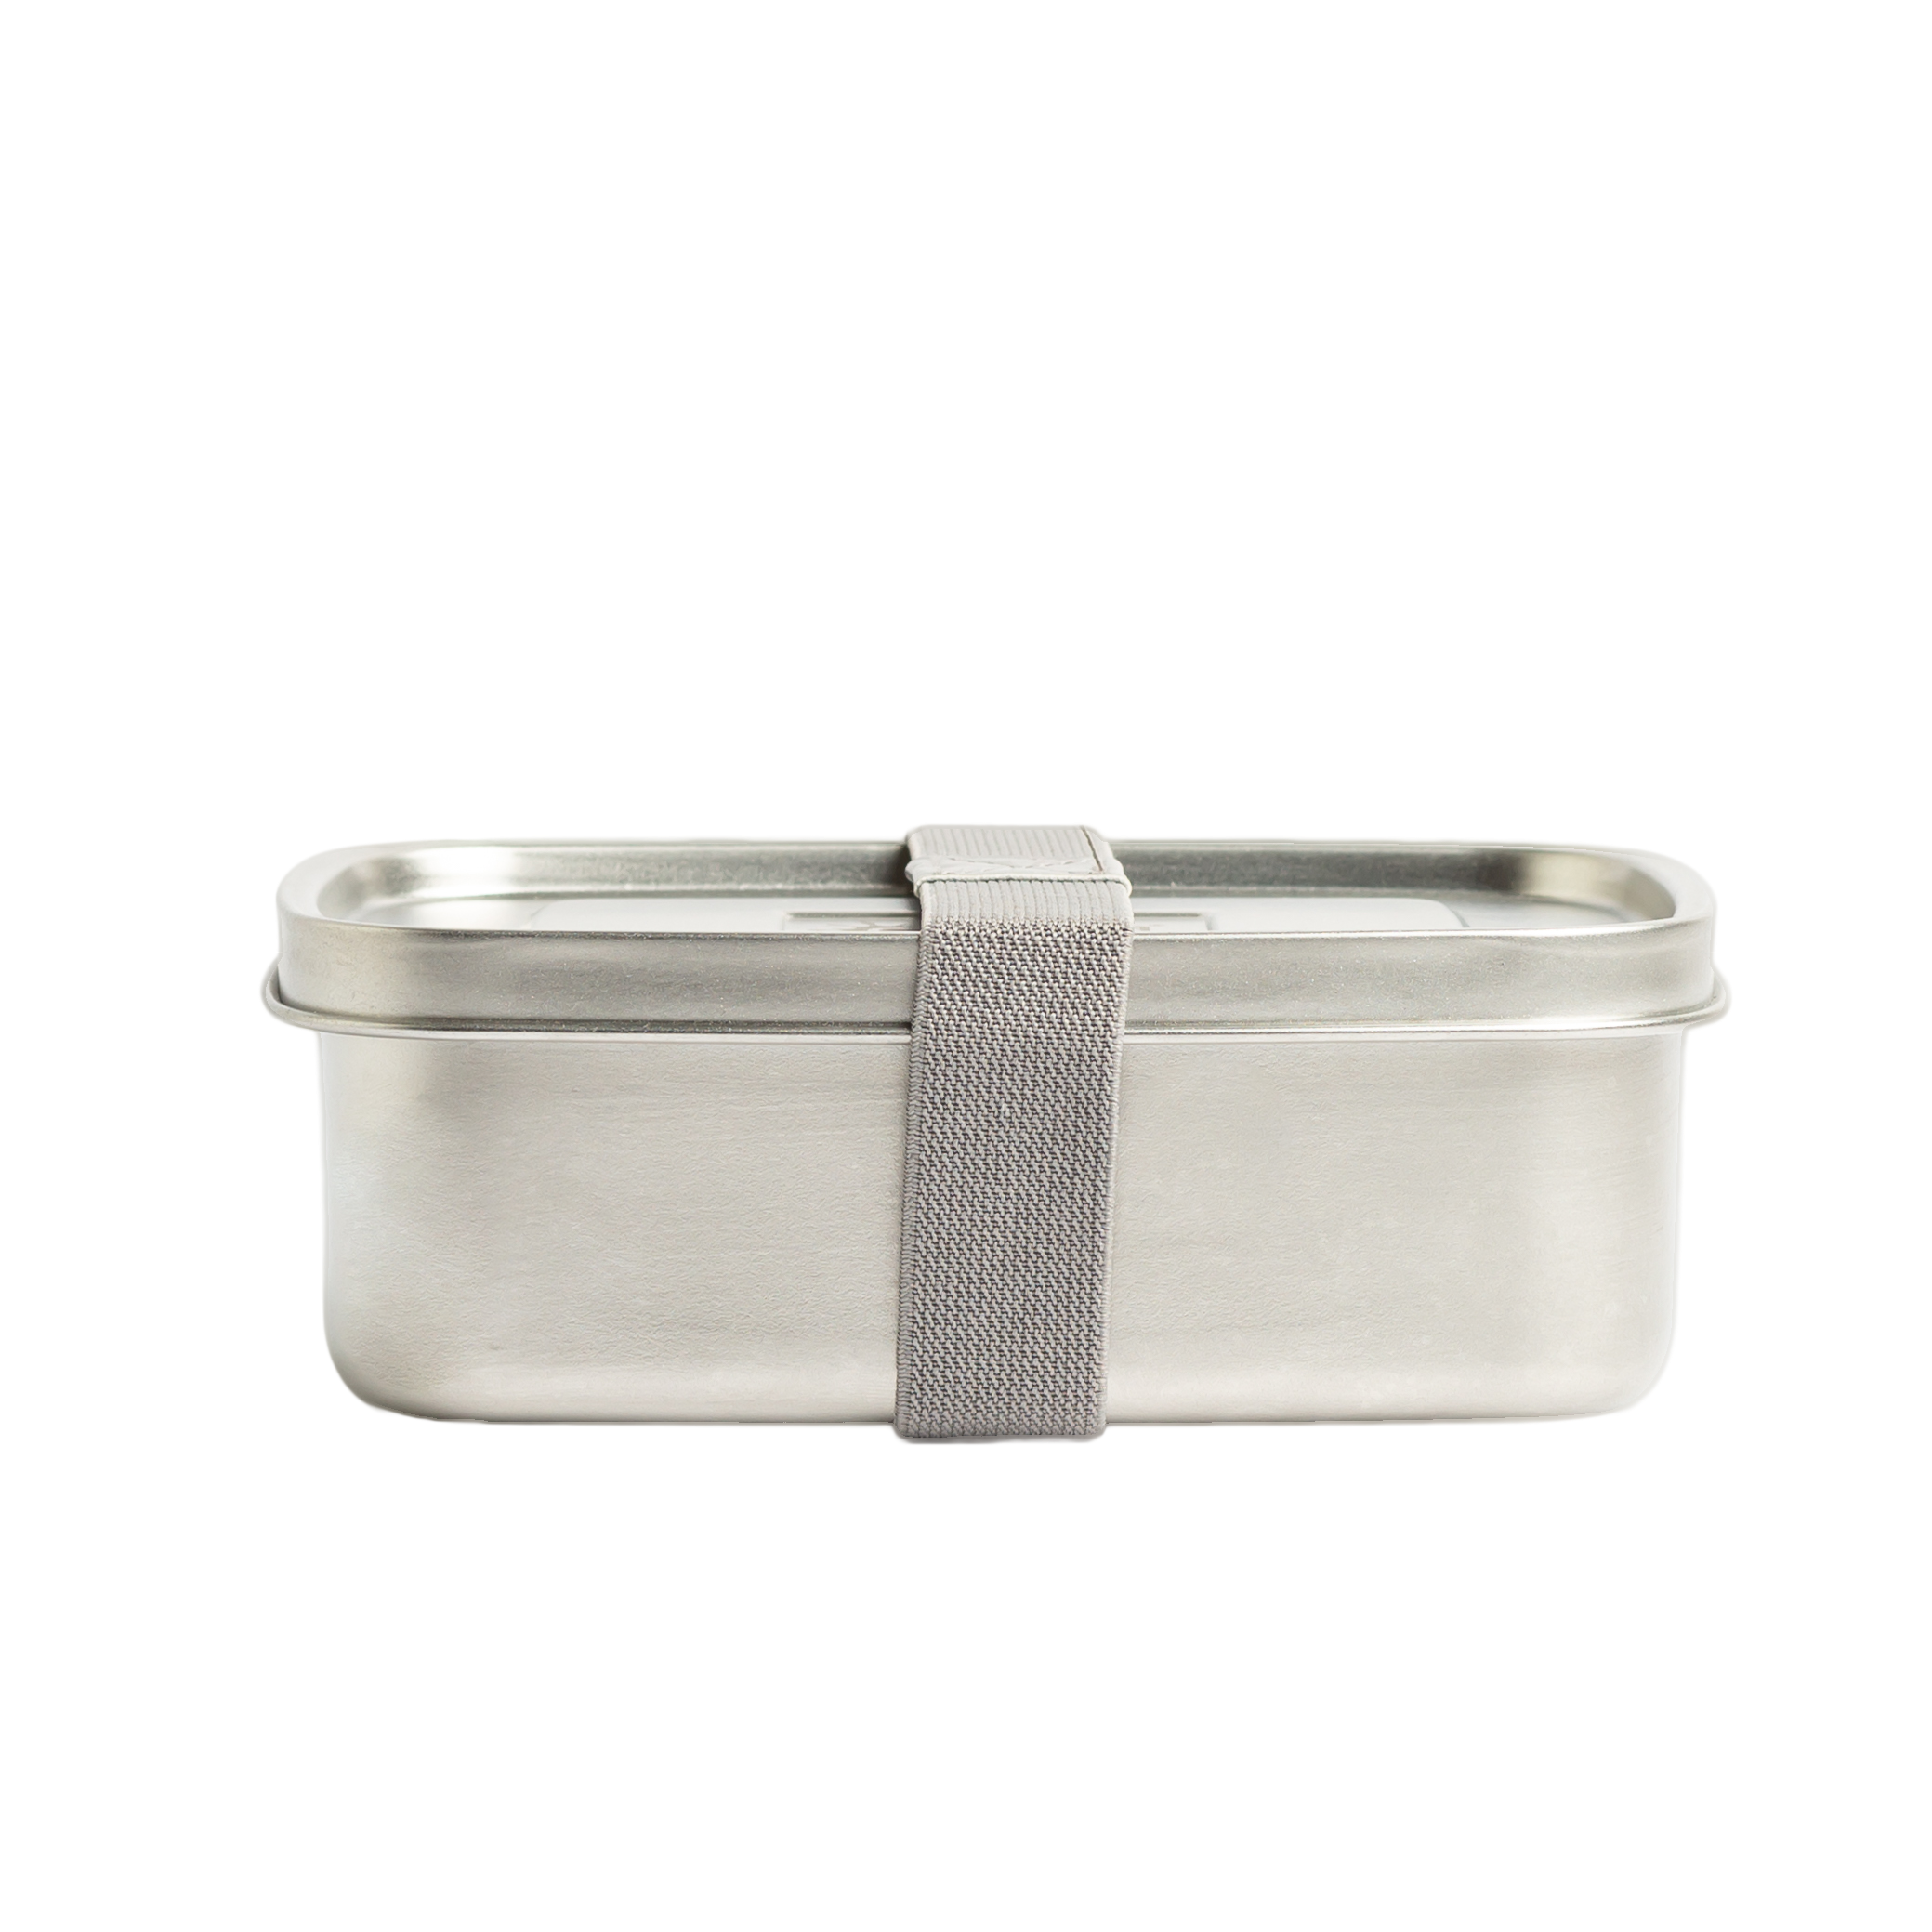 Cheeki - The Essential Stainless Steel Lunchbox